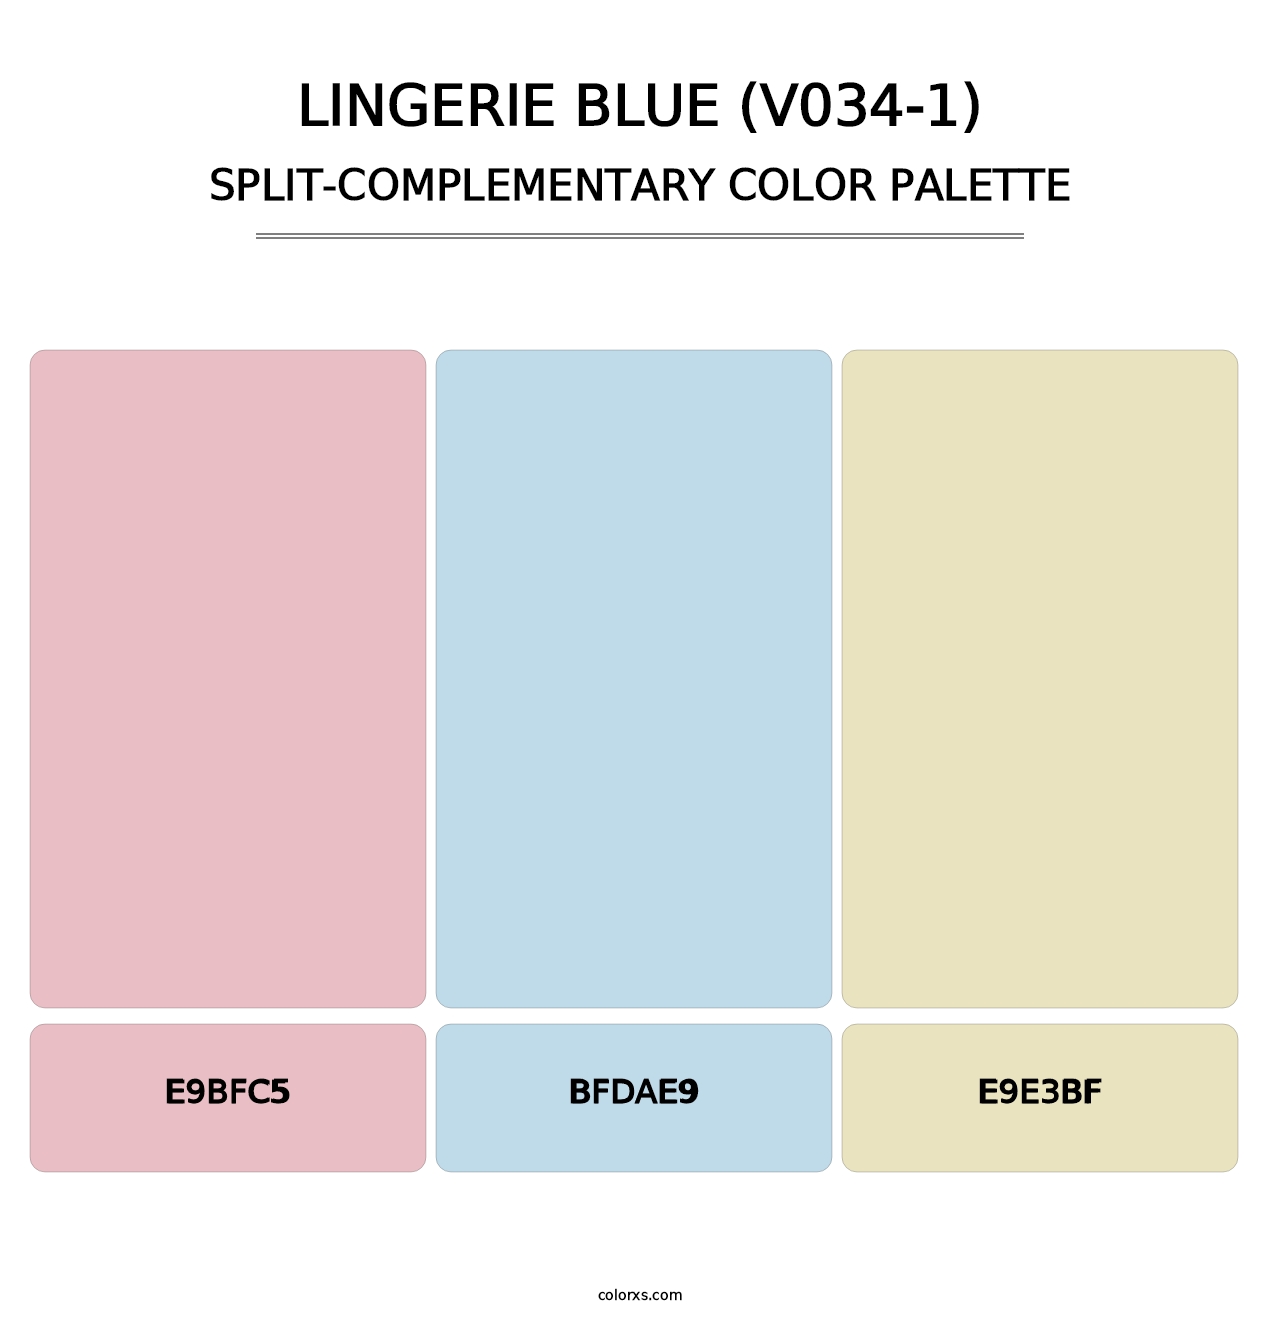 Lingerie Blue (V034-1) - Split-Complementary Color Palette